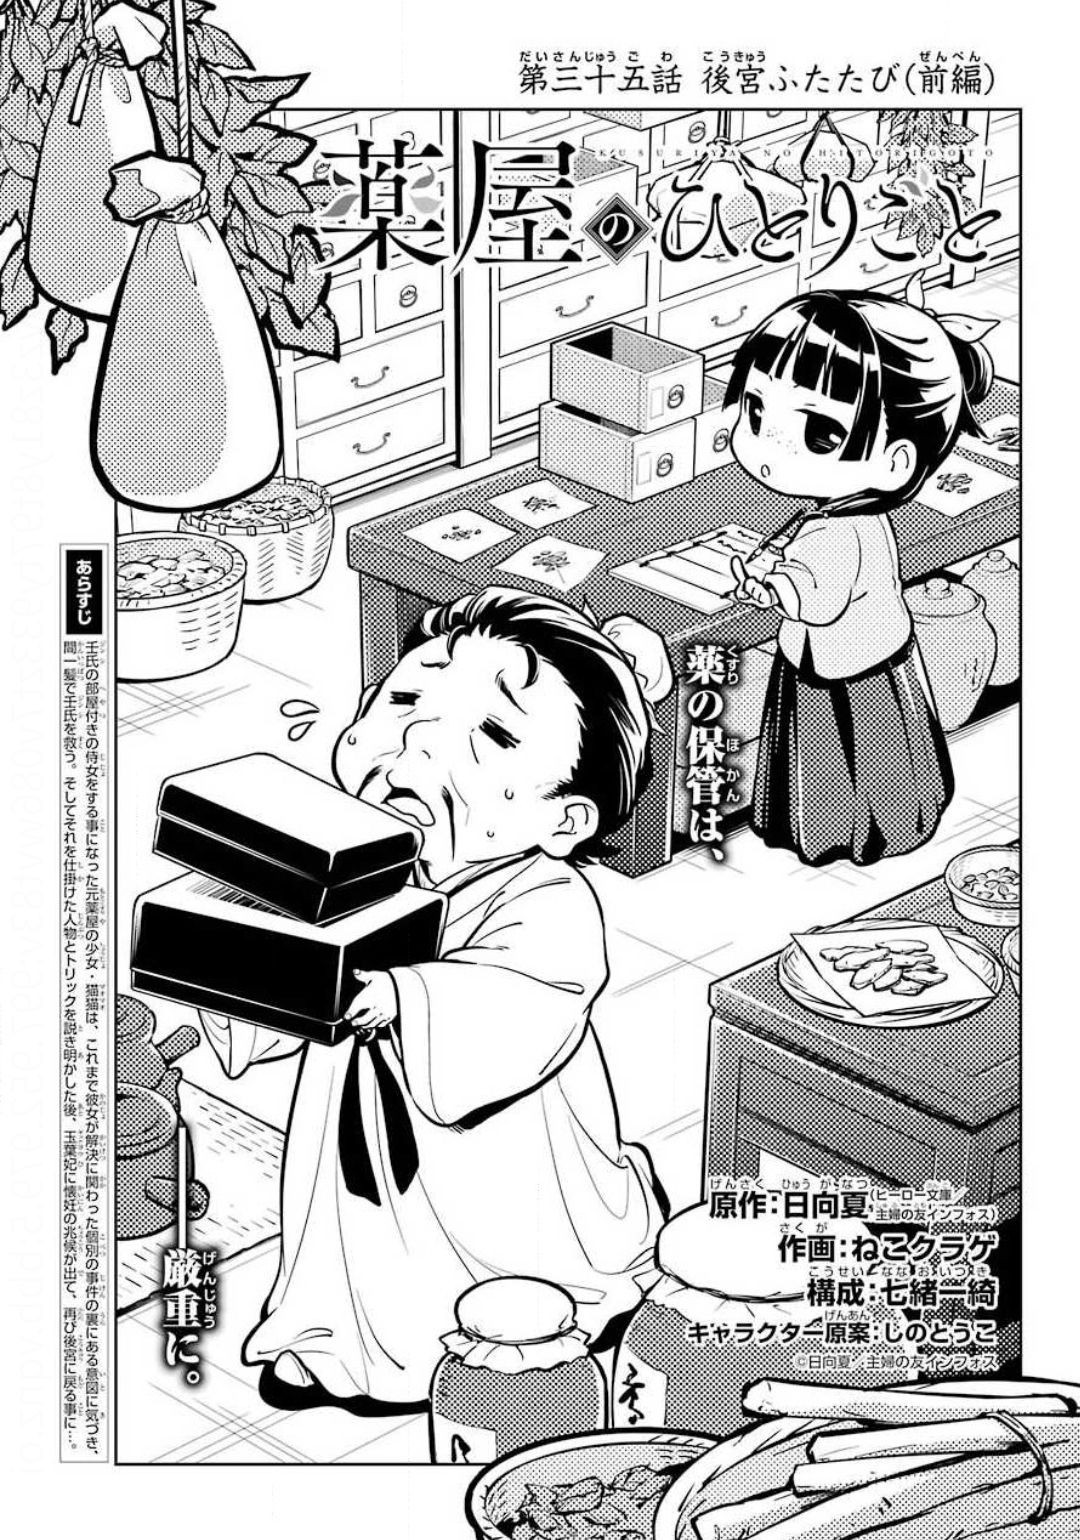 Kusuriya no Hitorigoto - Chapter 35-1 - Page 2